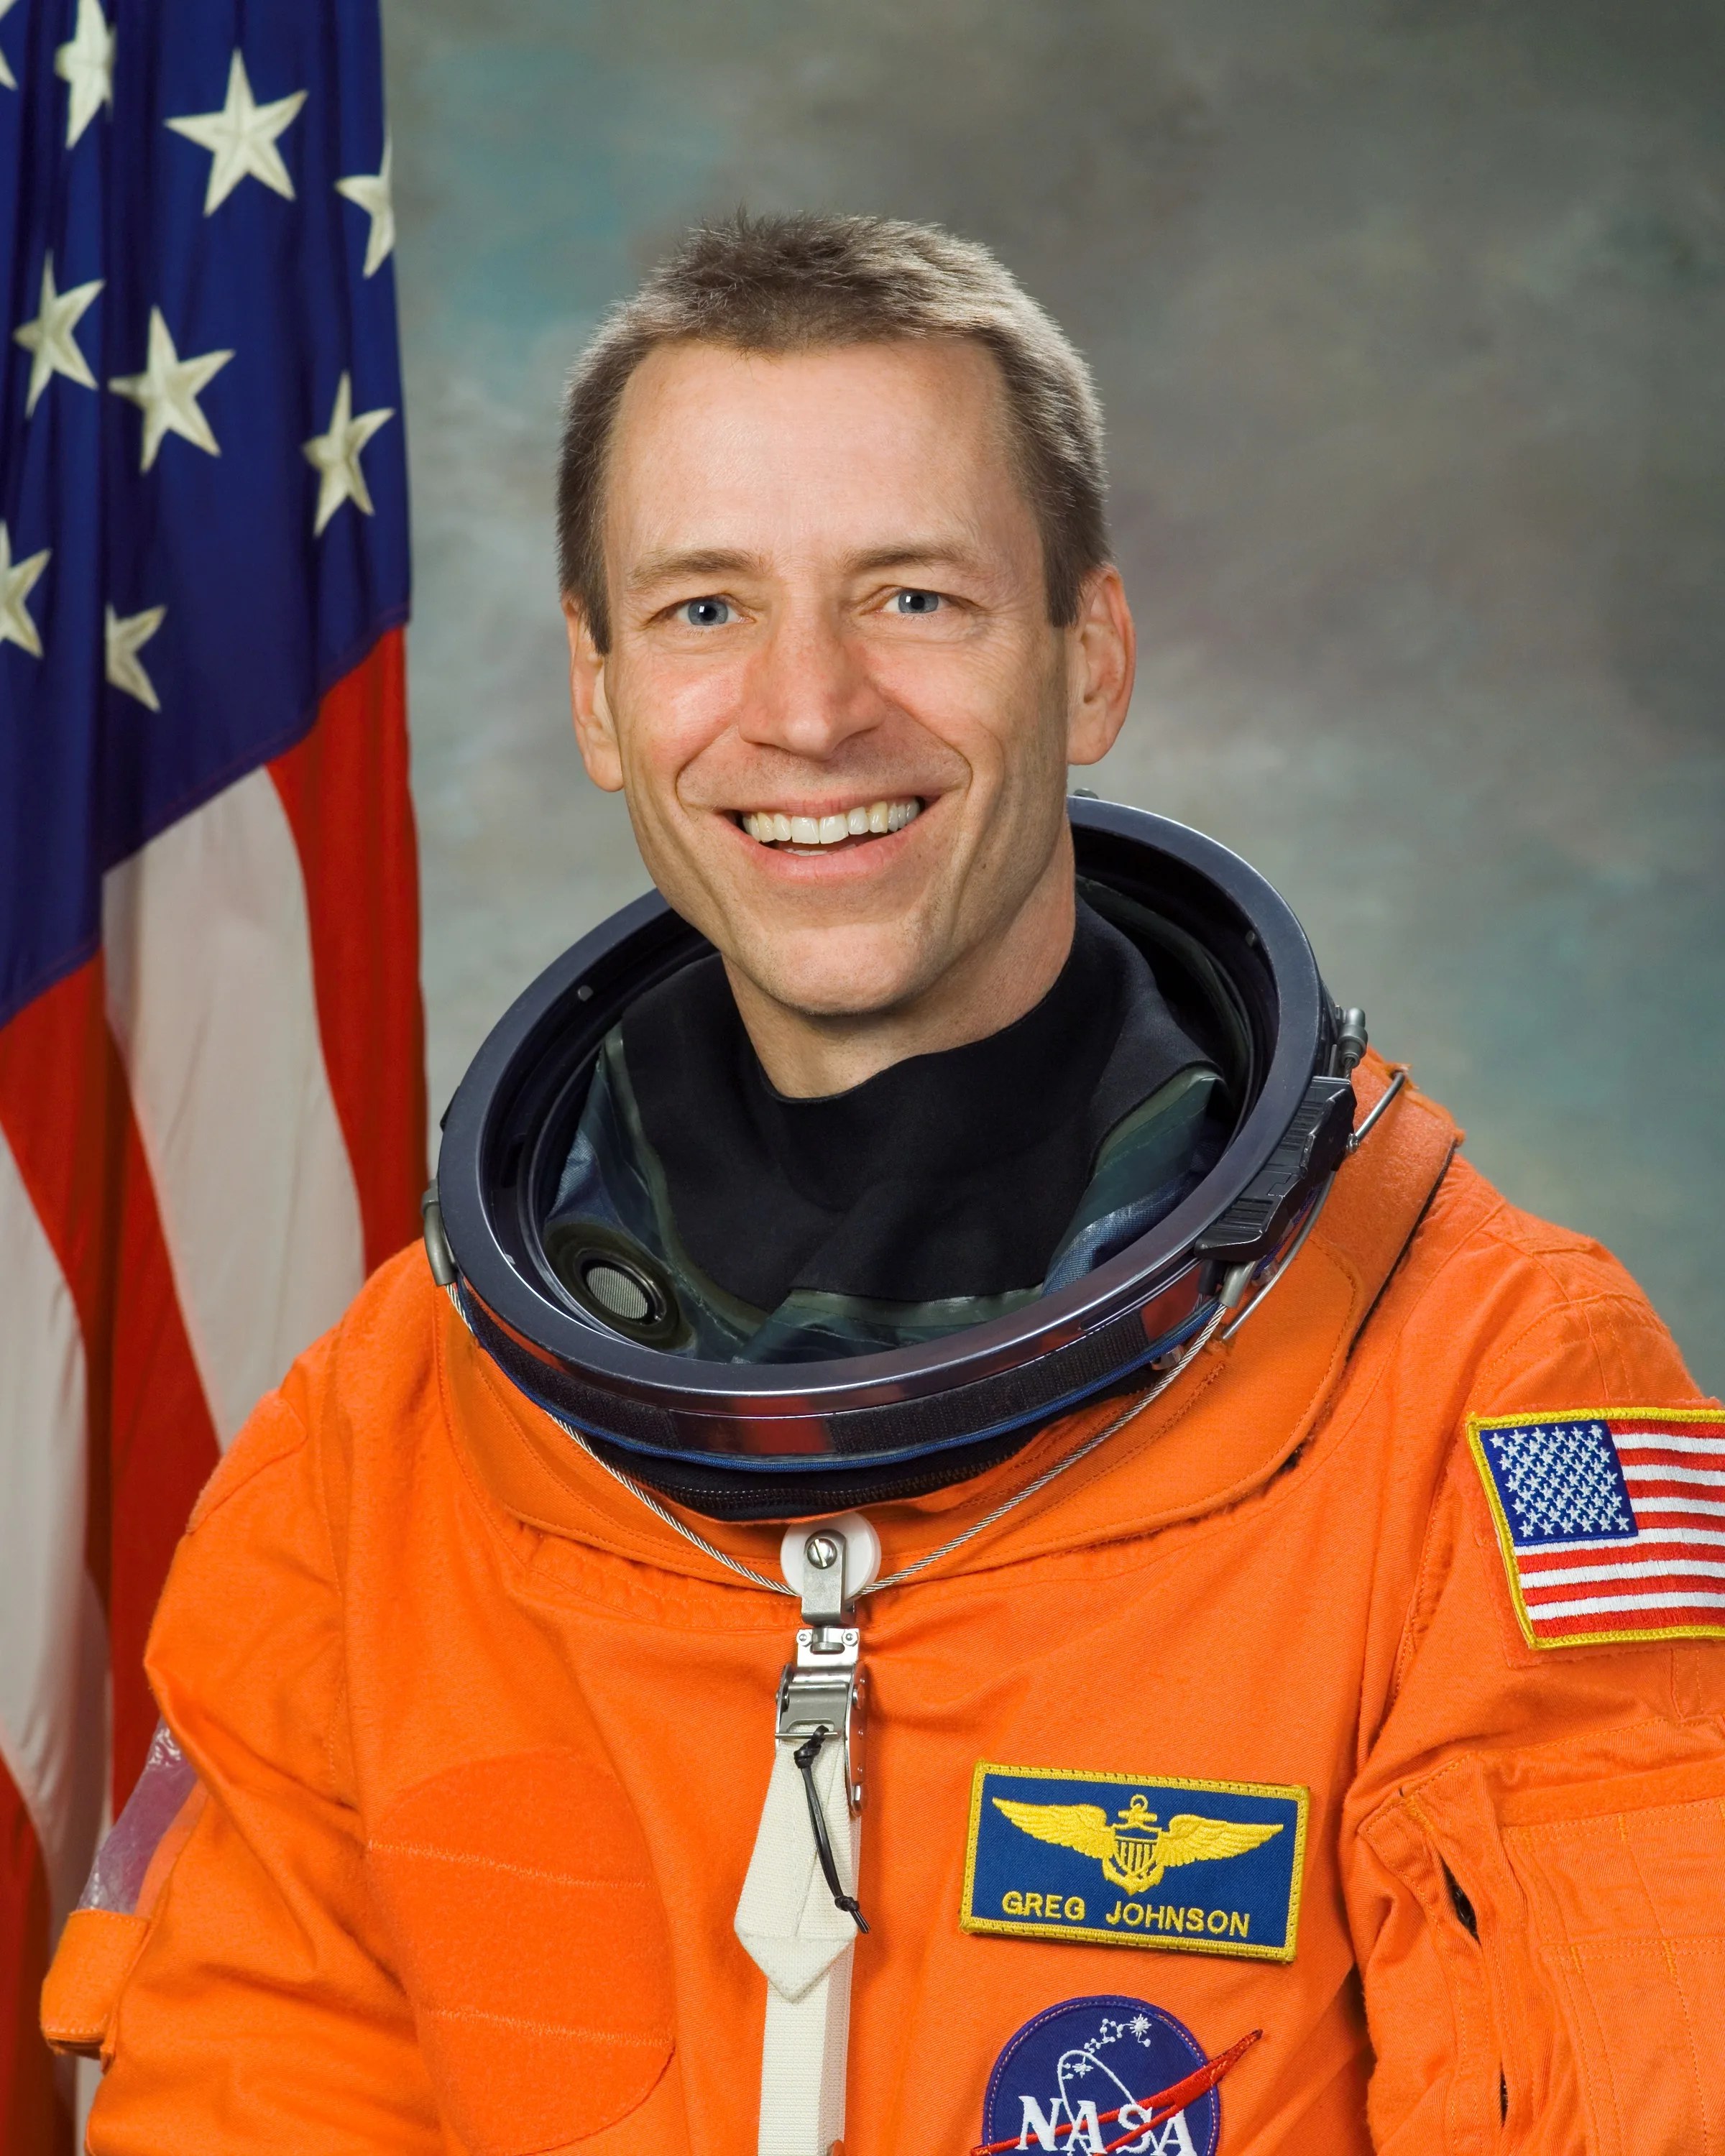 Official astronaut portrait of Gregory Johnson.